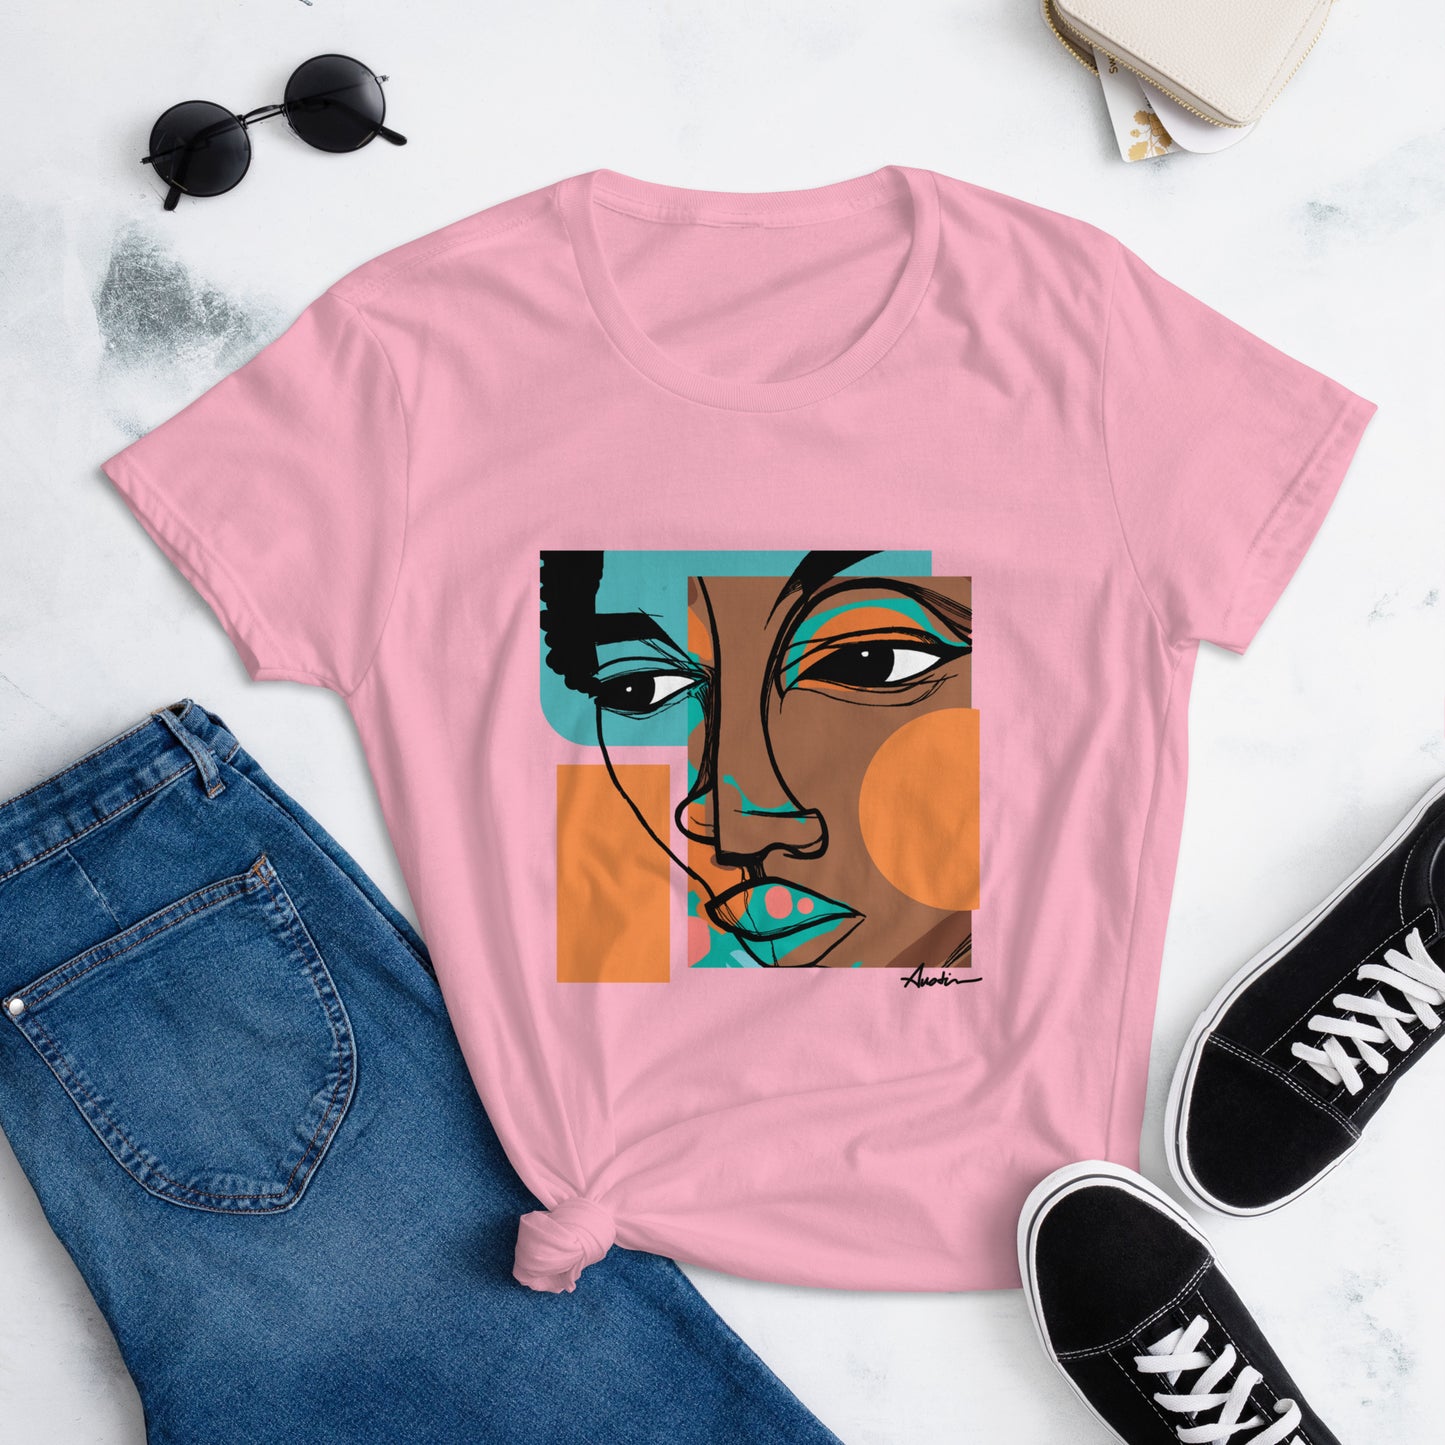 Mood (One) Women's Fashion Fit T-shirt